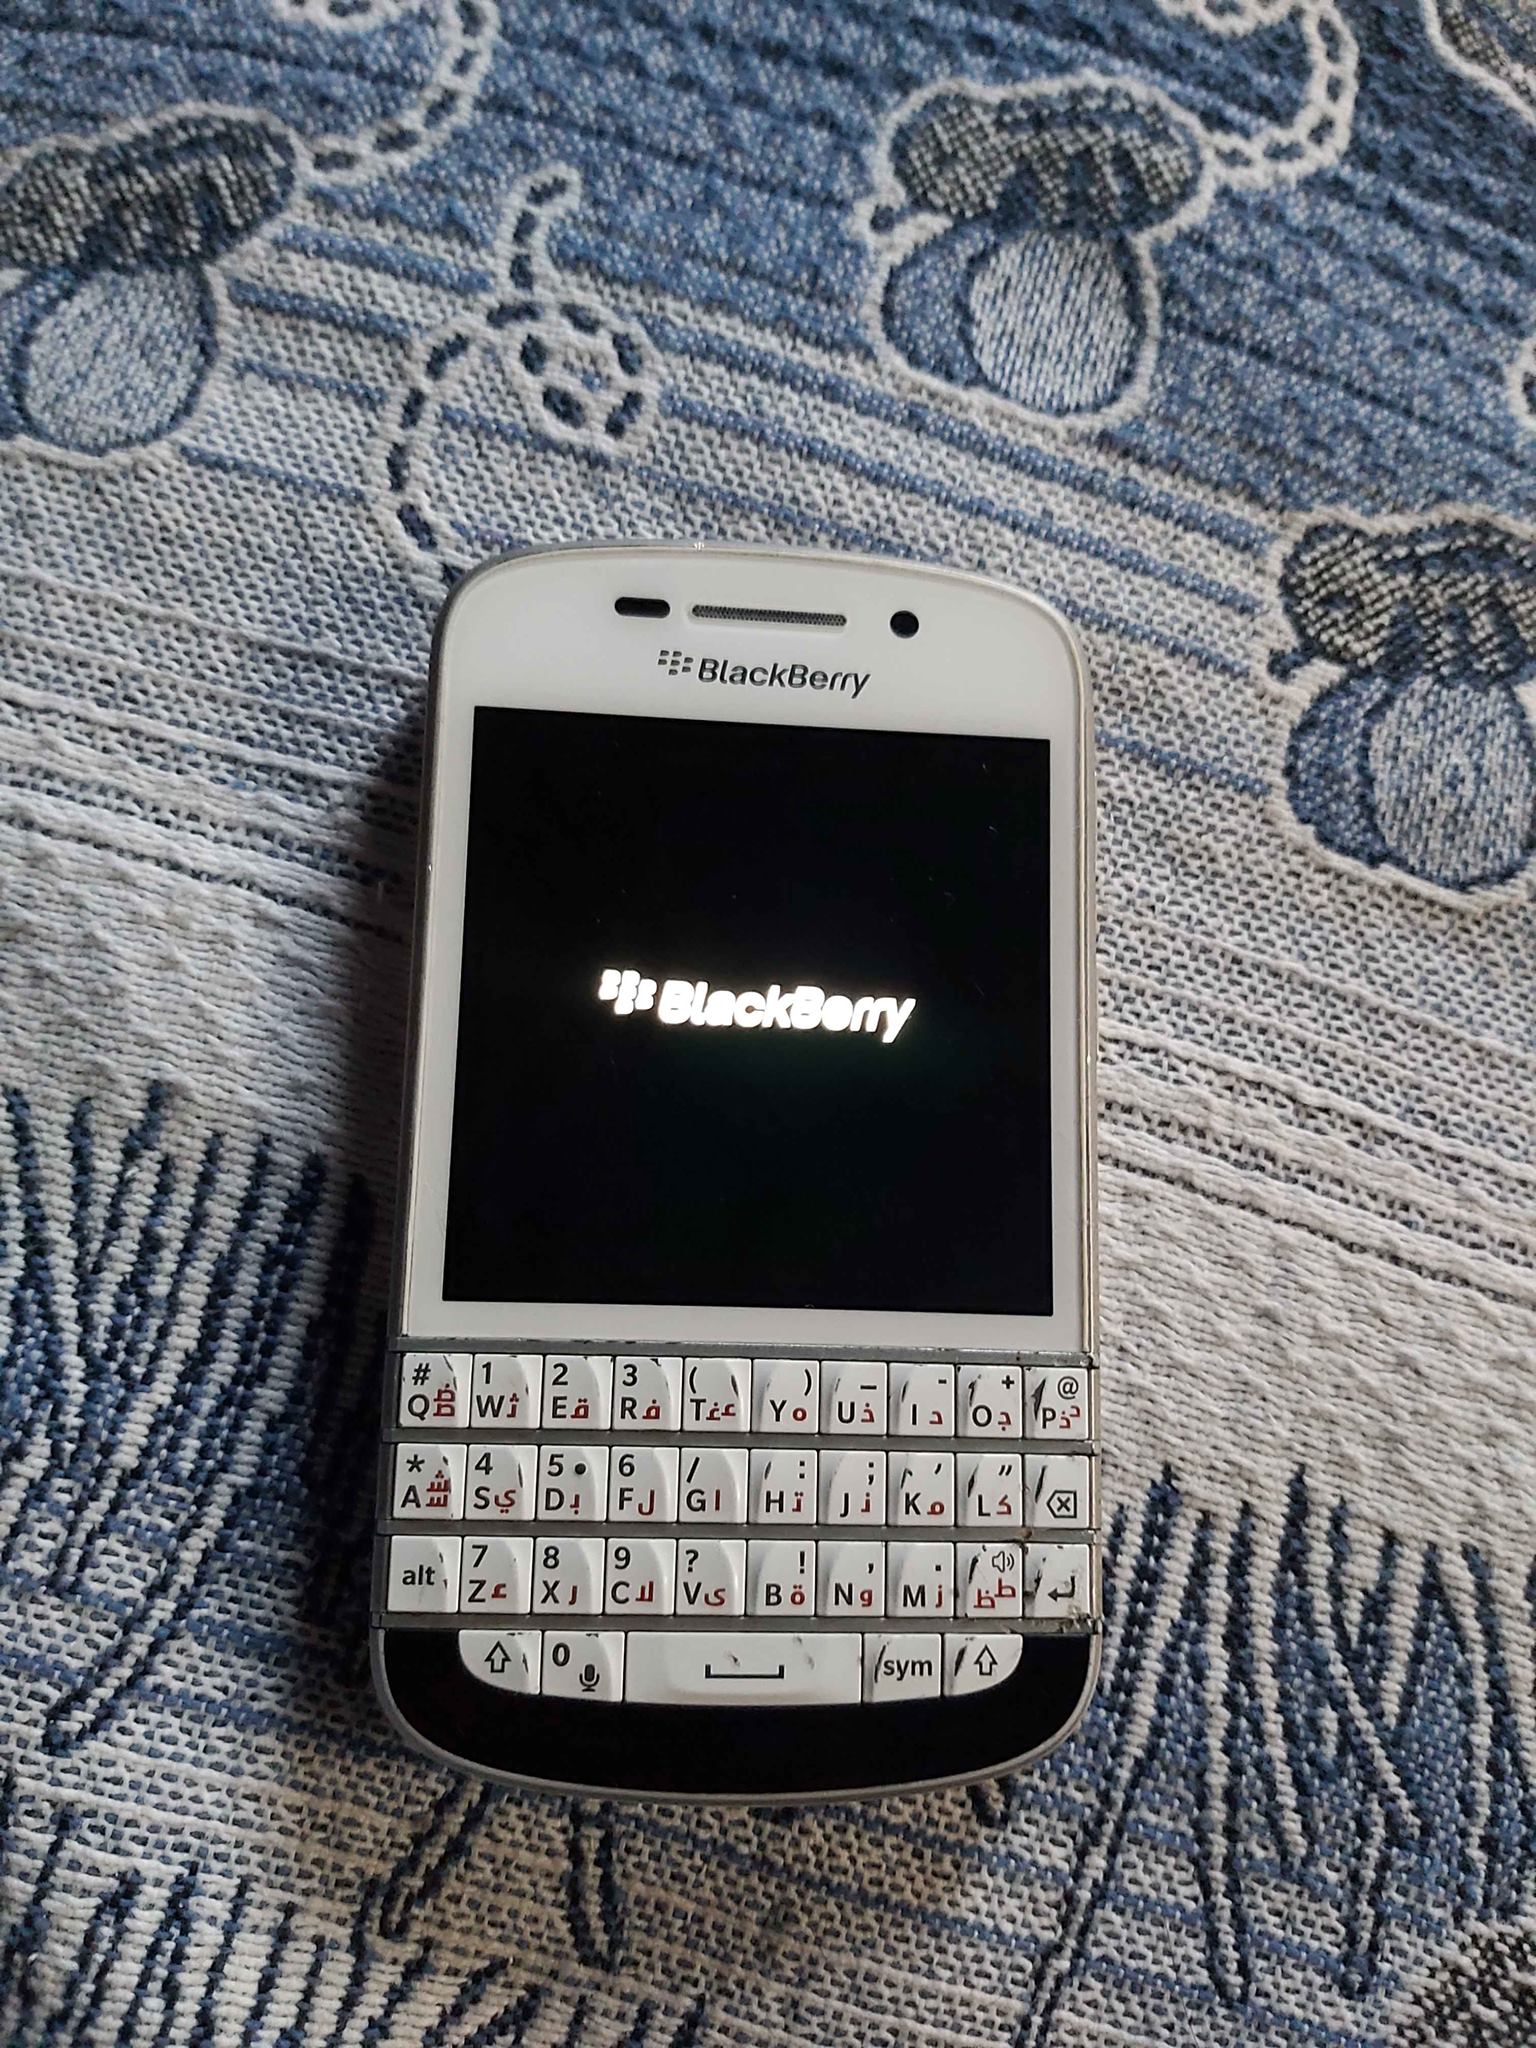 Vendo Blackberry Q10 liberada